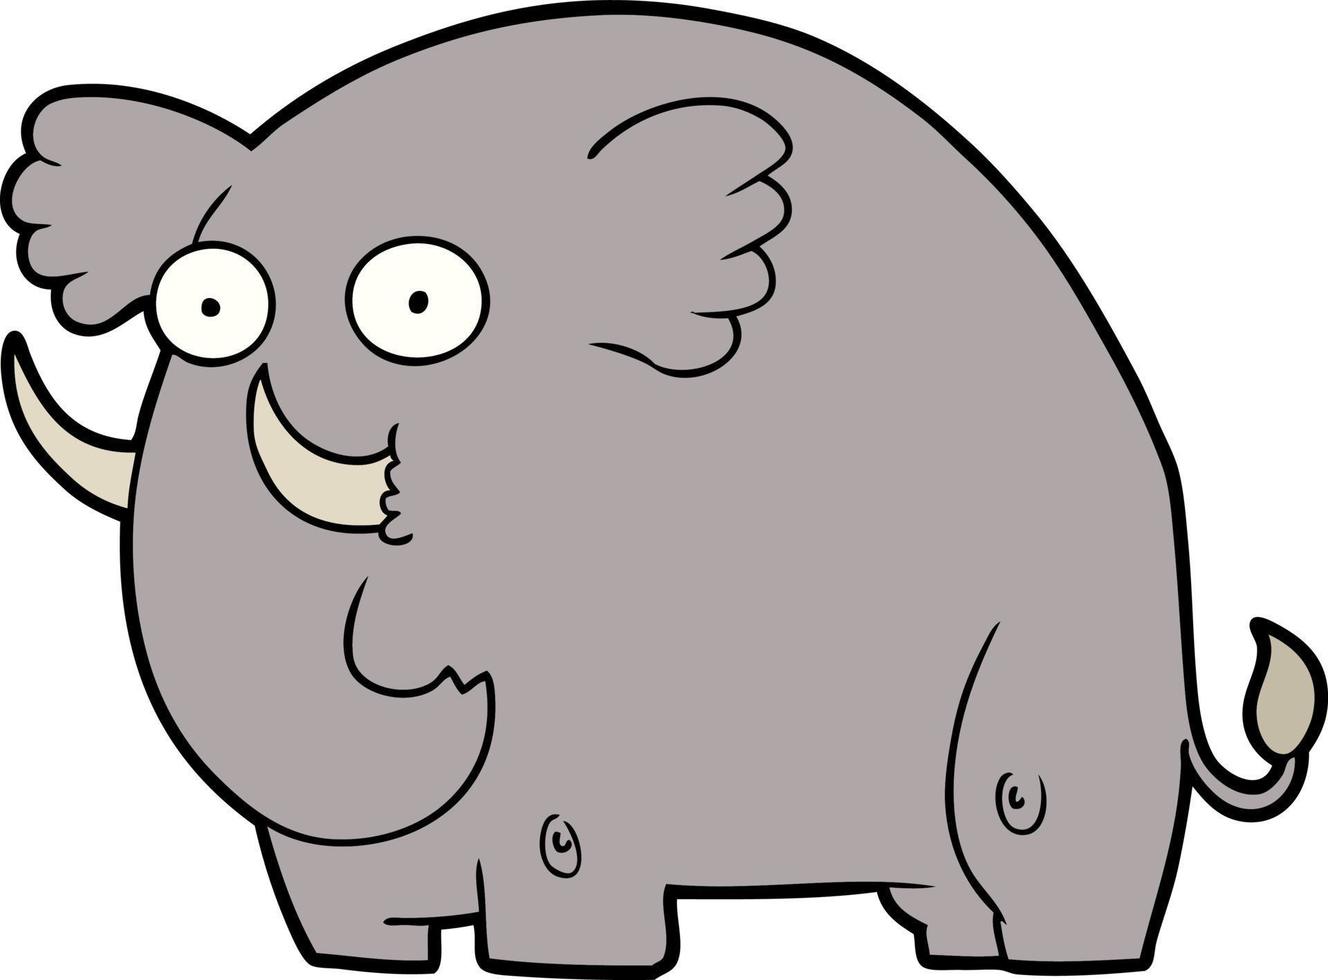 cartoon elephant character vector